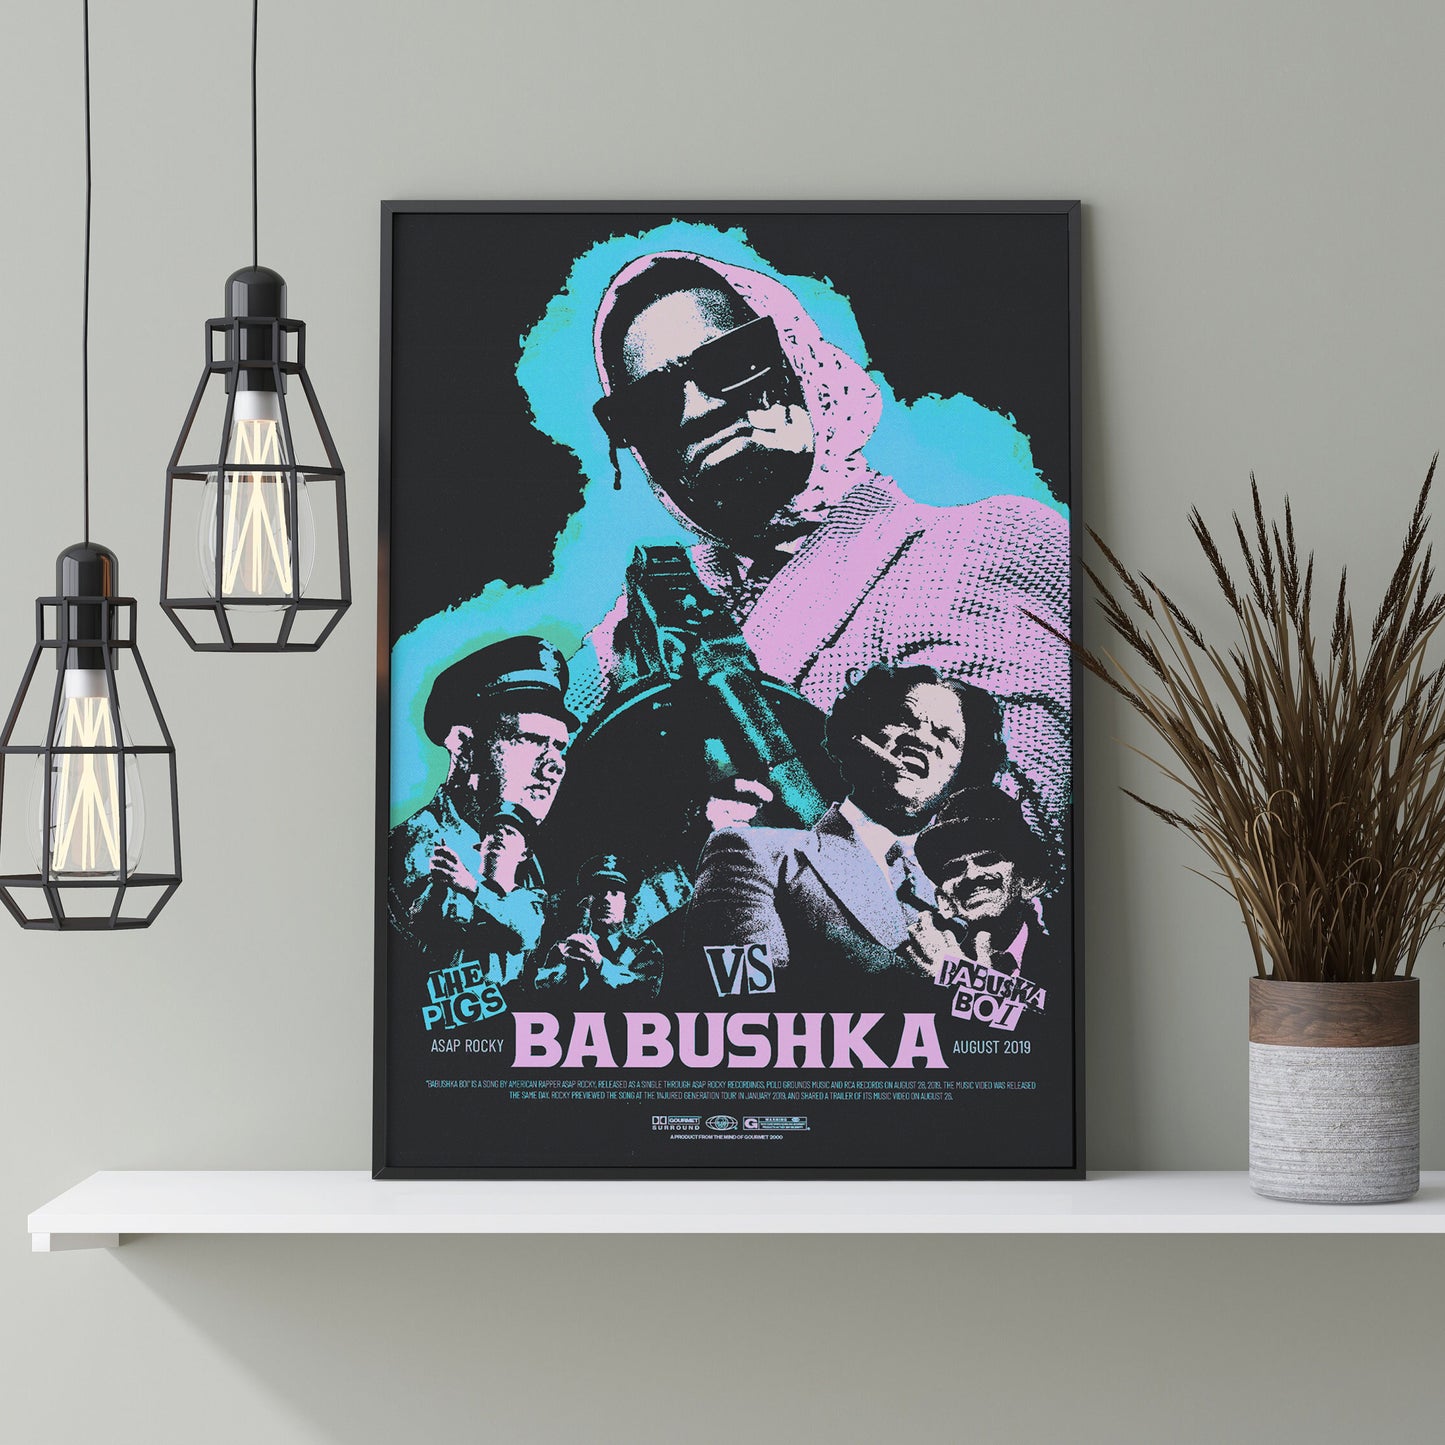 THE BABUSHKA POSTER